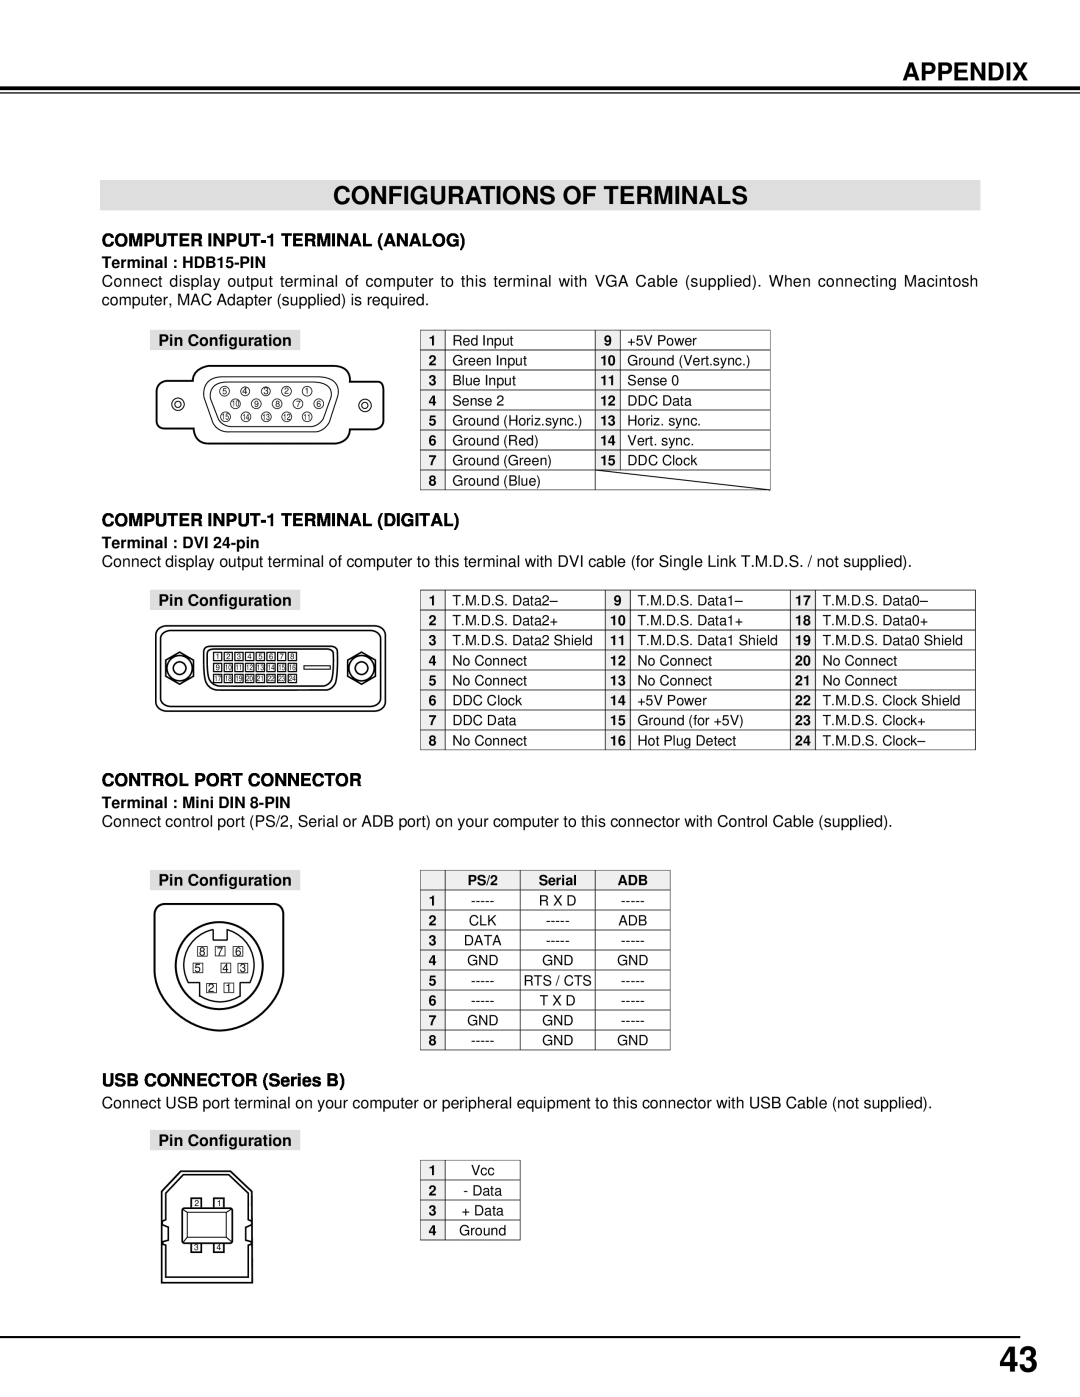 Eiki LC-X986 instruction manual Terminal HDB15-PIN, Pin Configuration, Terminal DVI 24-pin, Terminal Mini DIN 8-PIN 